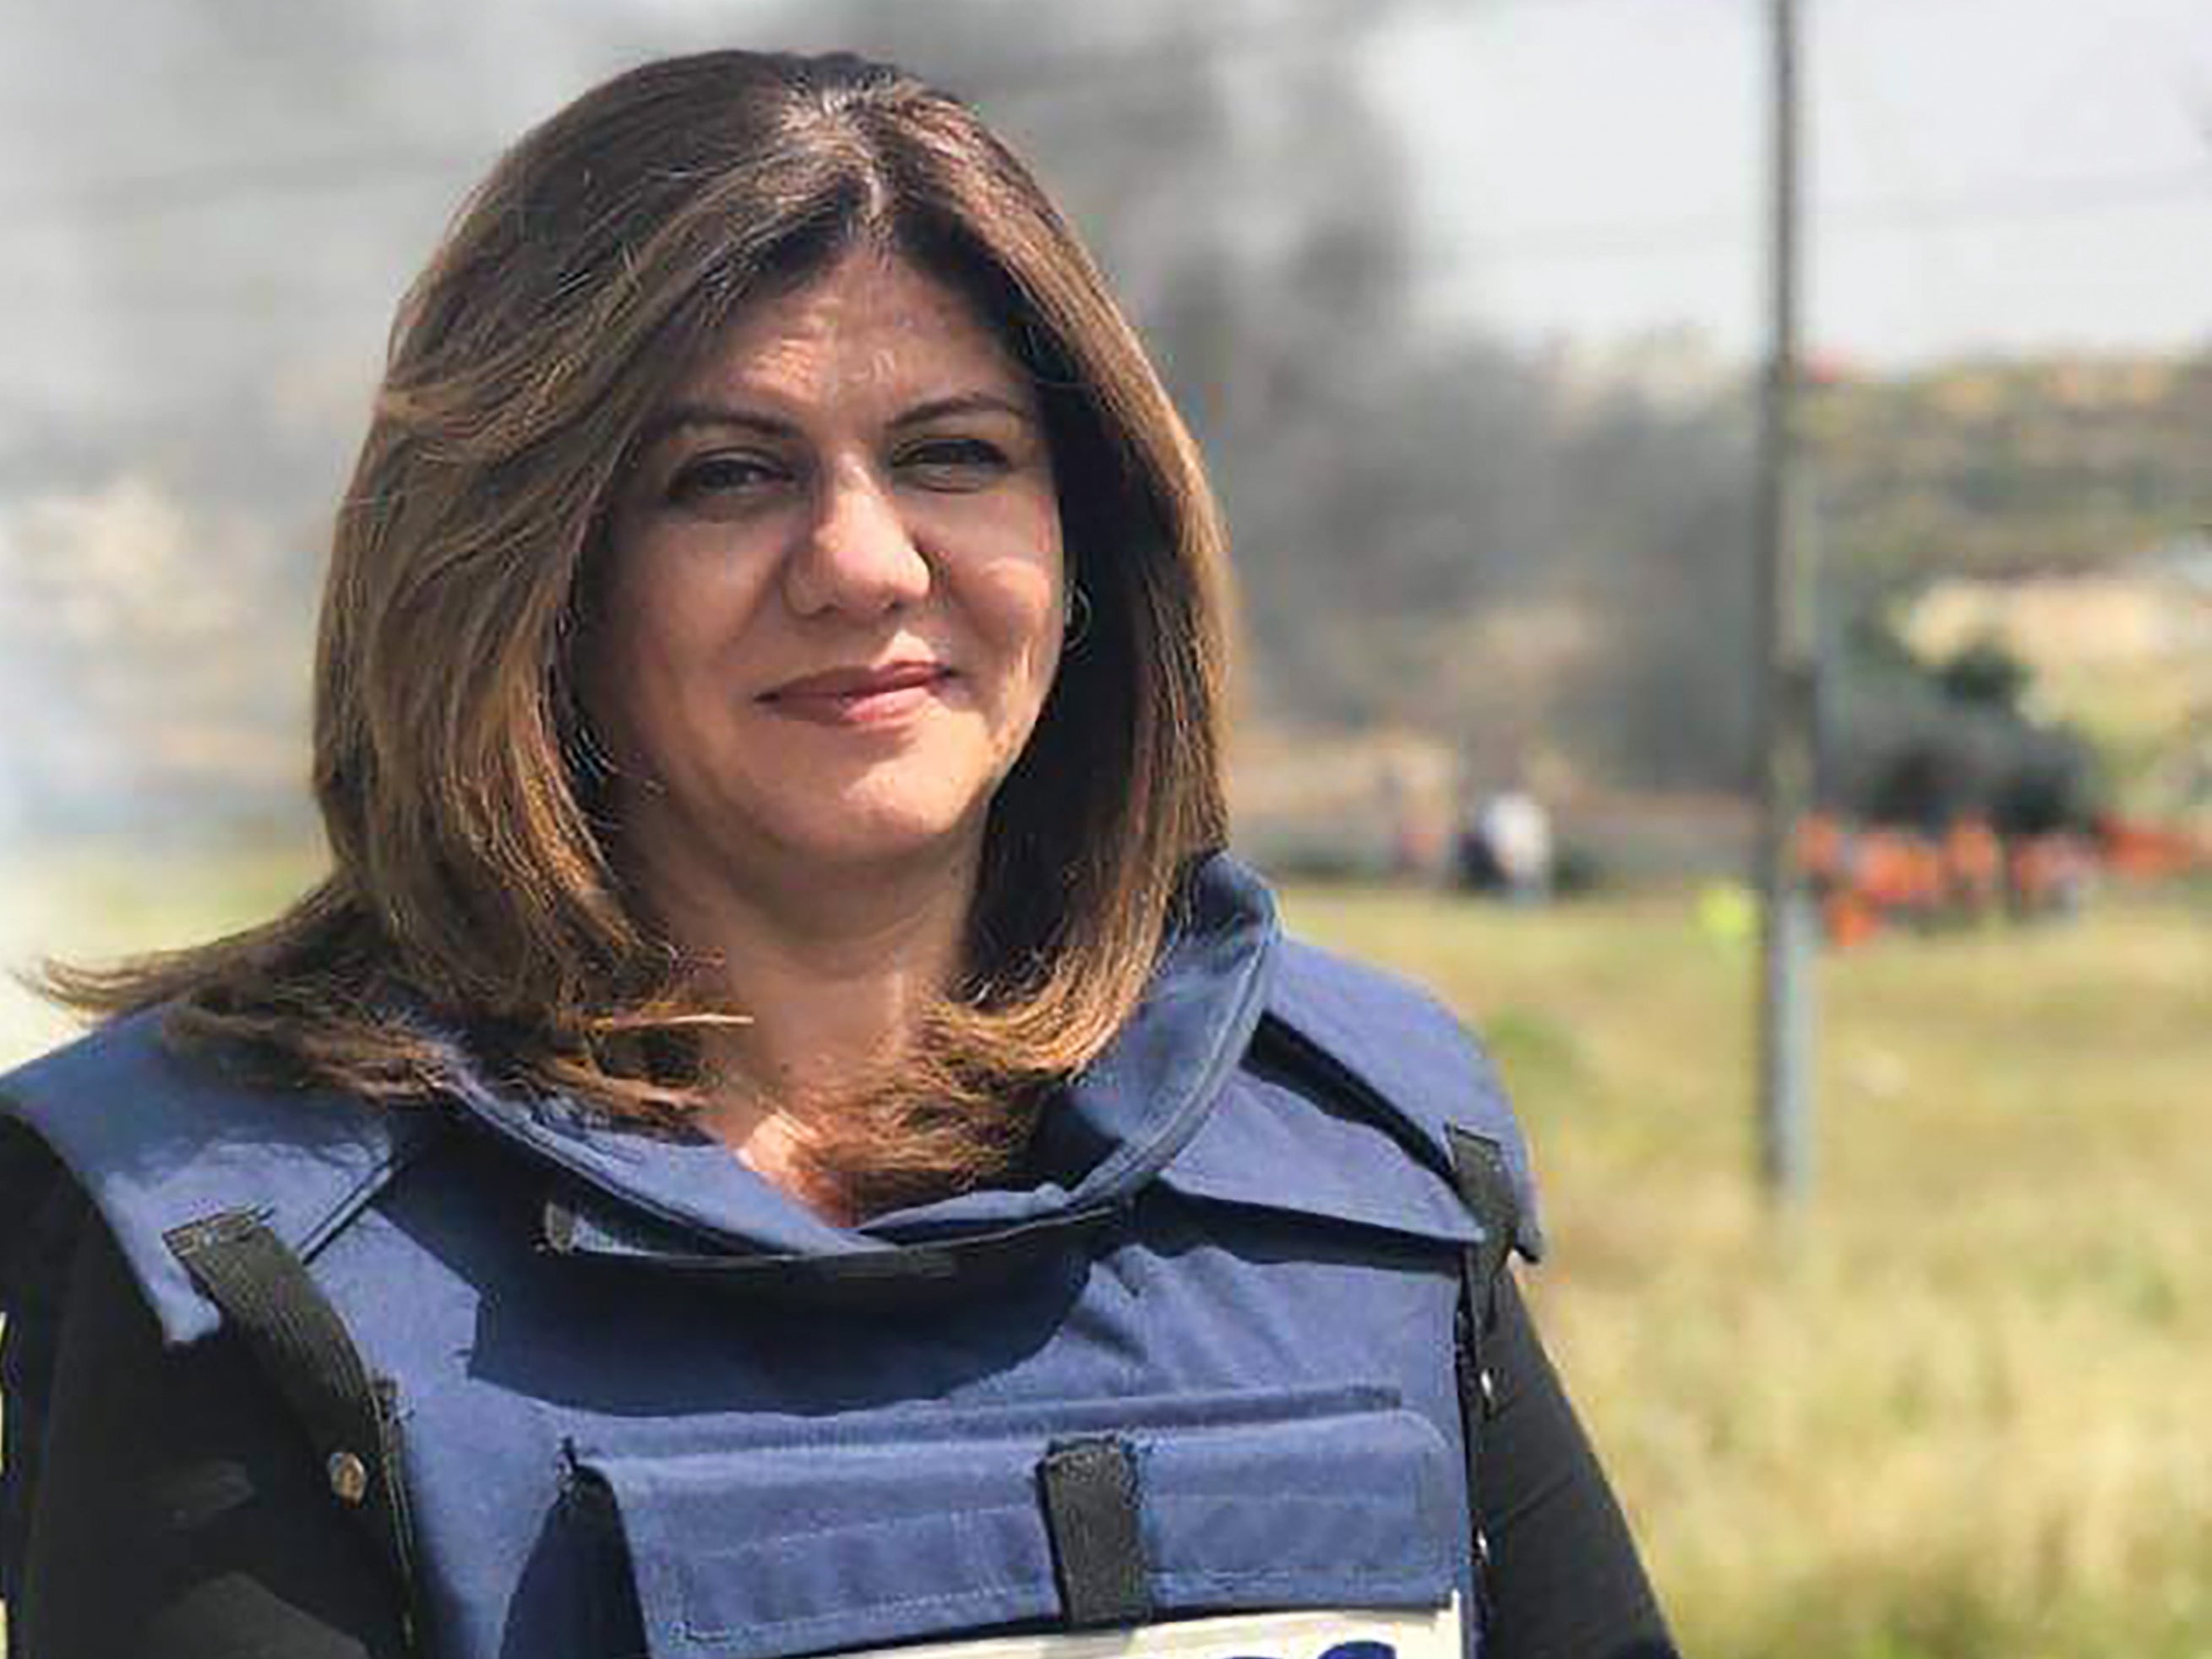 Al Jazeera journalist Shireen Abu Akleh was shot and killed last month